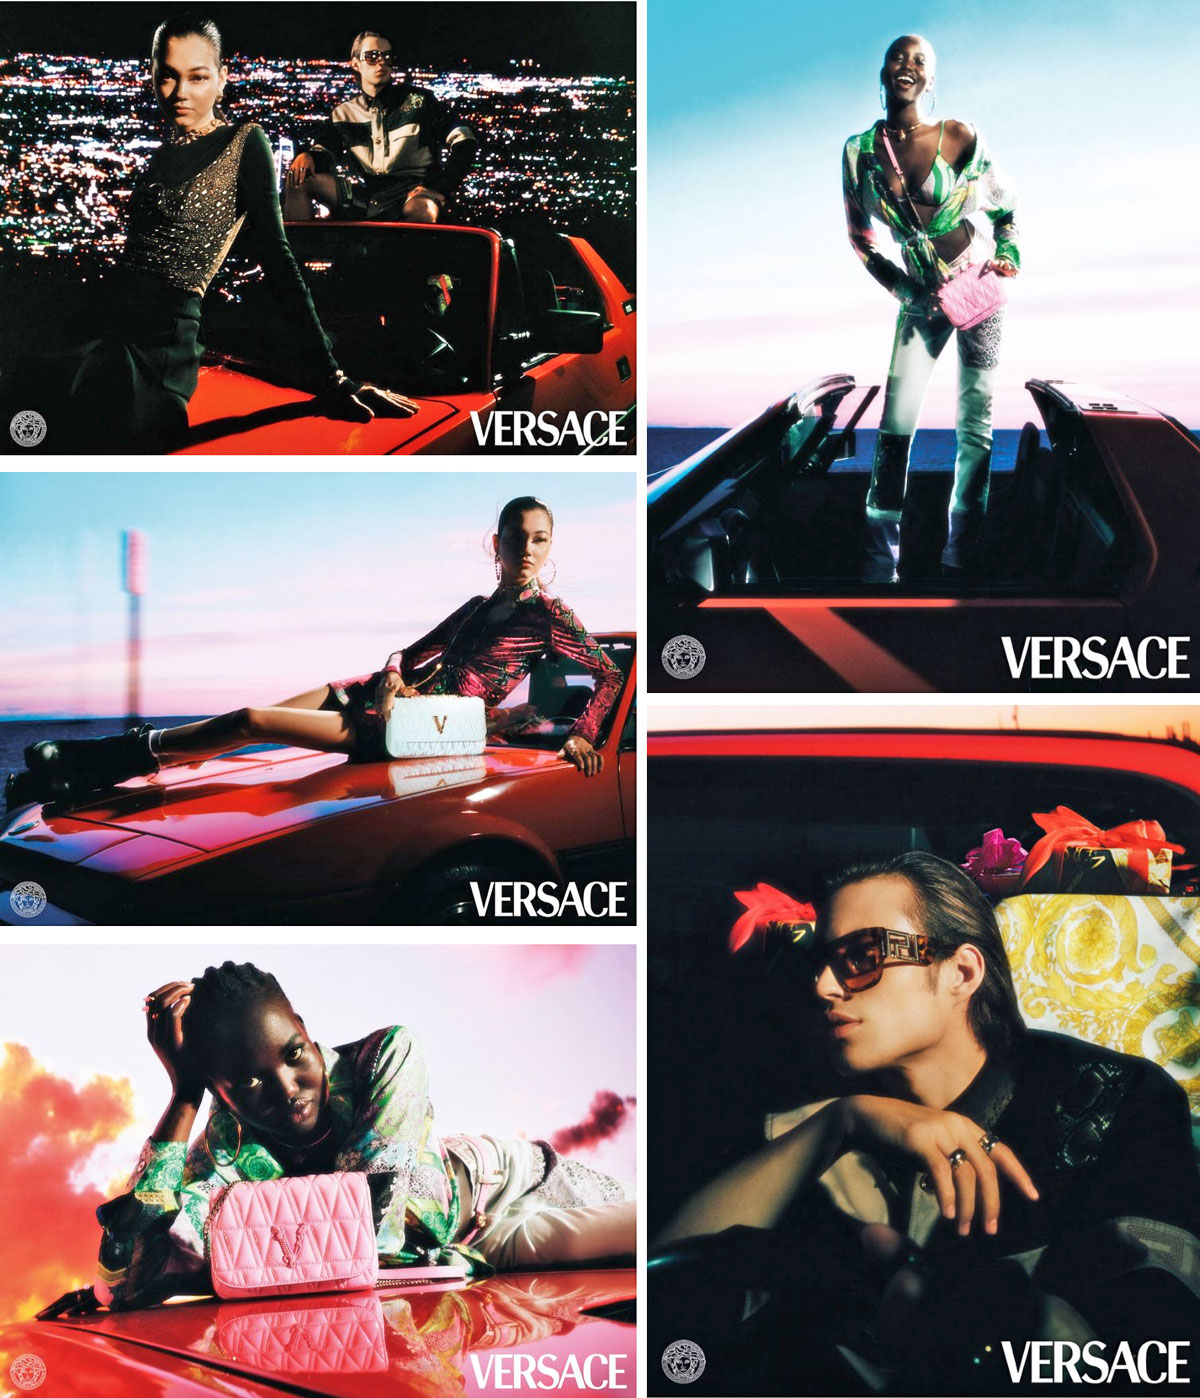 Bertone X1/9 icsunonove Versace Holiday Campaign 2020